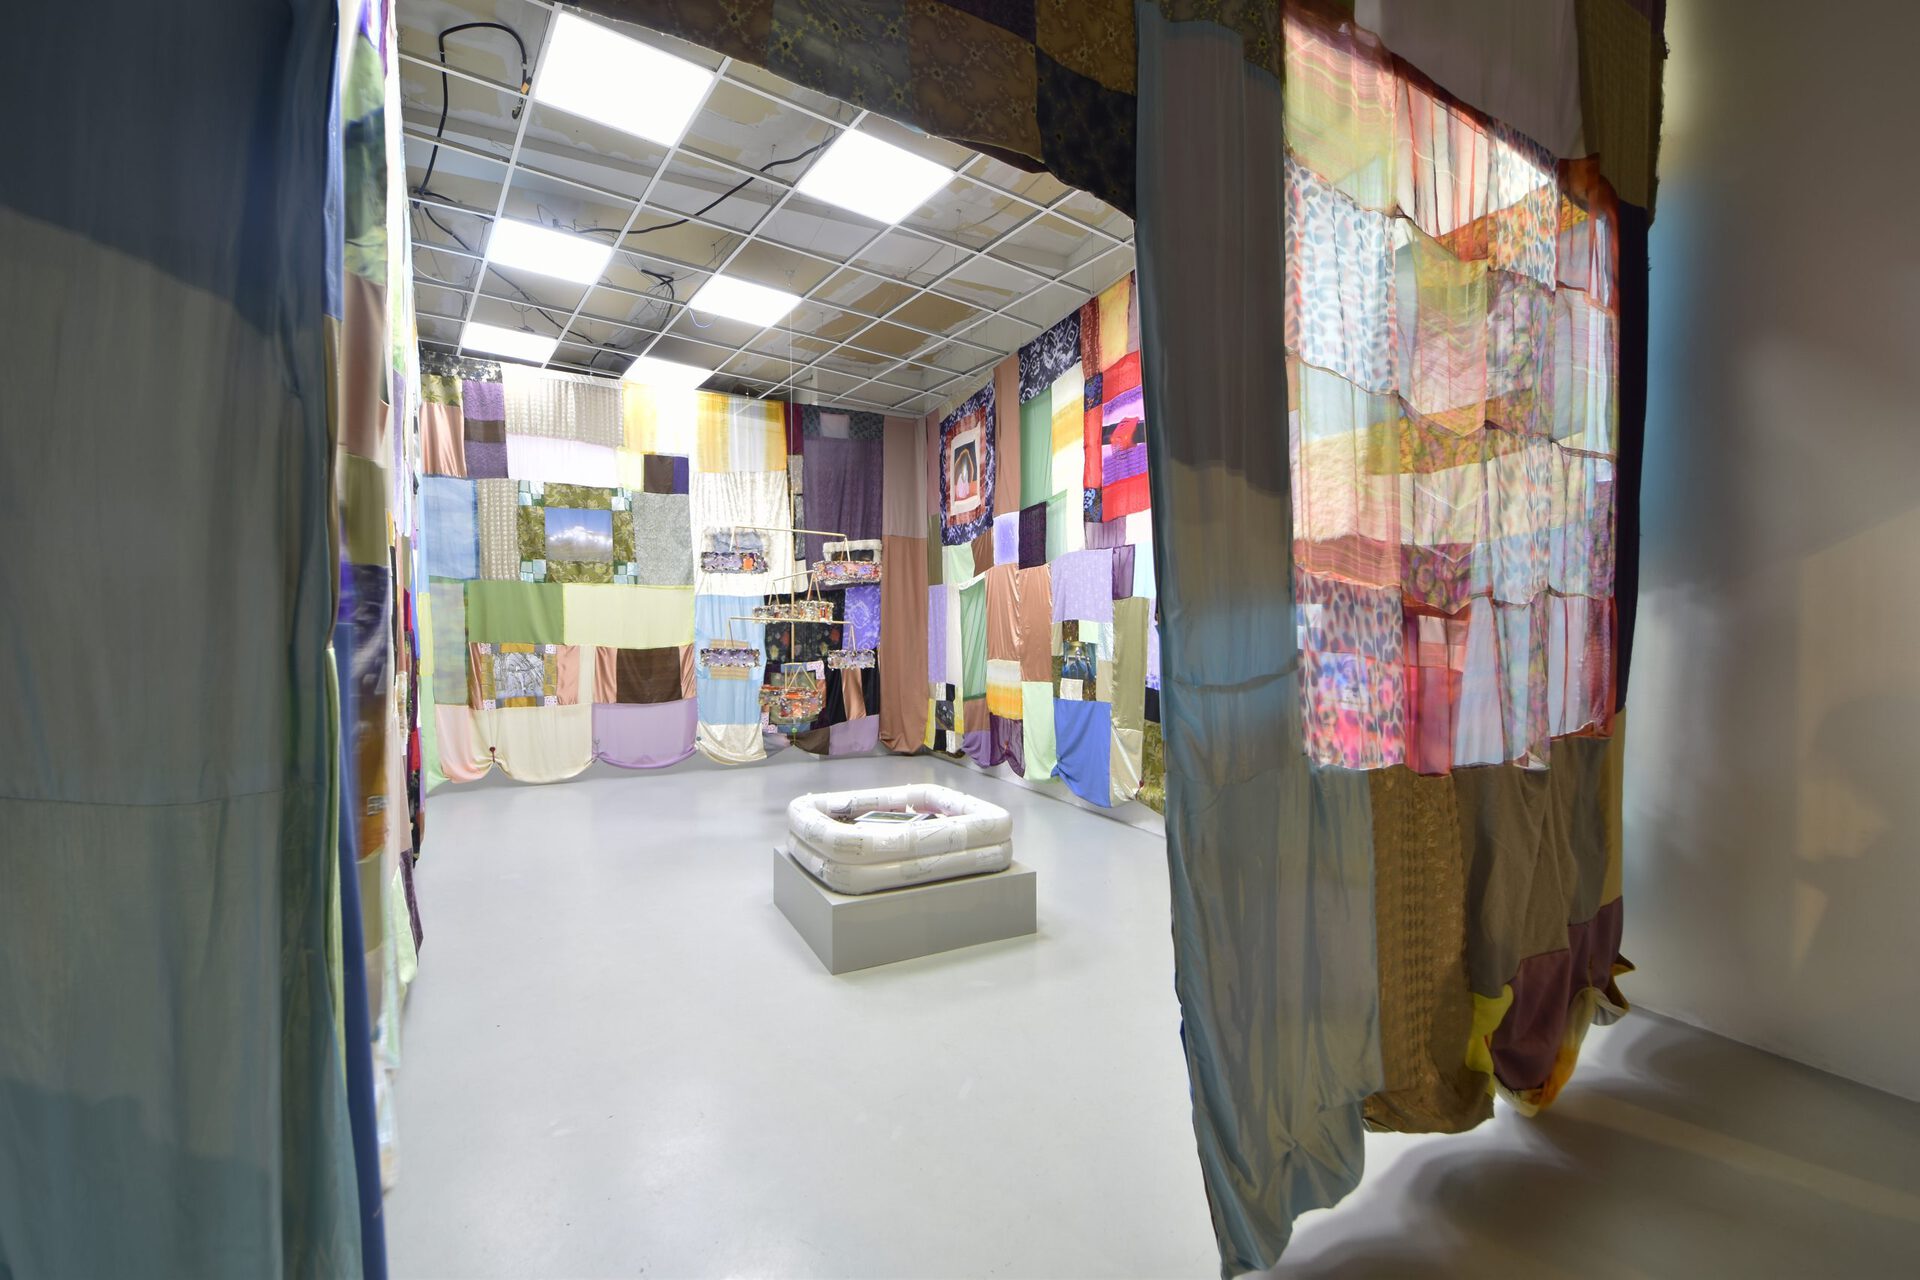 Viola Morini x Giacomo Giannantonio, "No child left behind", 2021, site-specific installation with various fabrics, variable dimensions